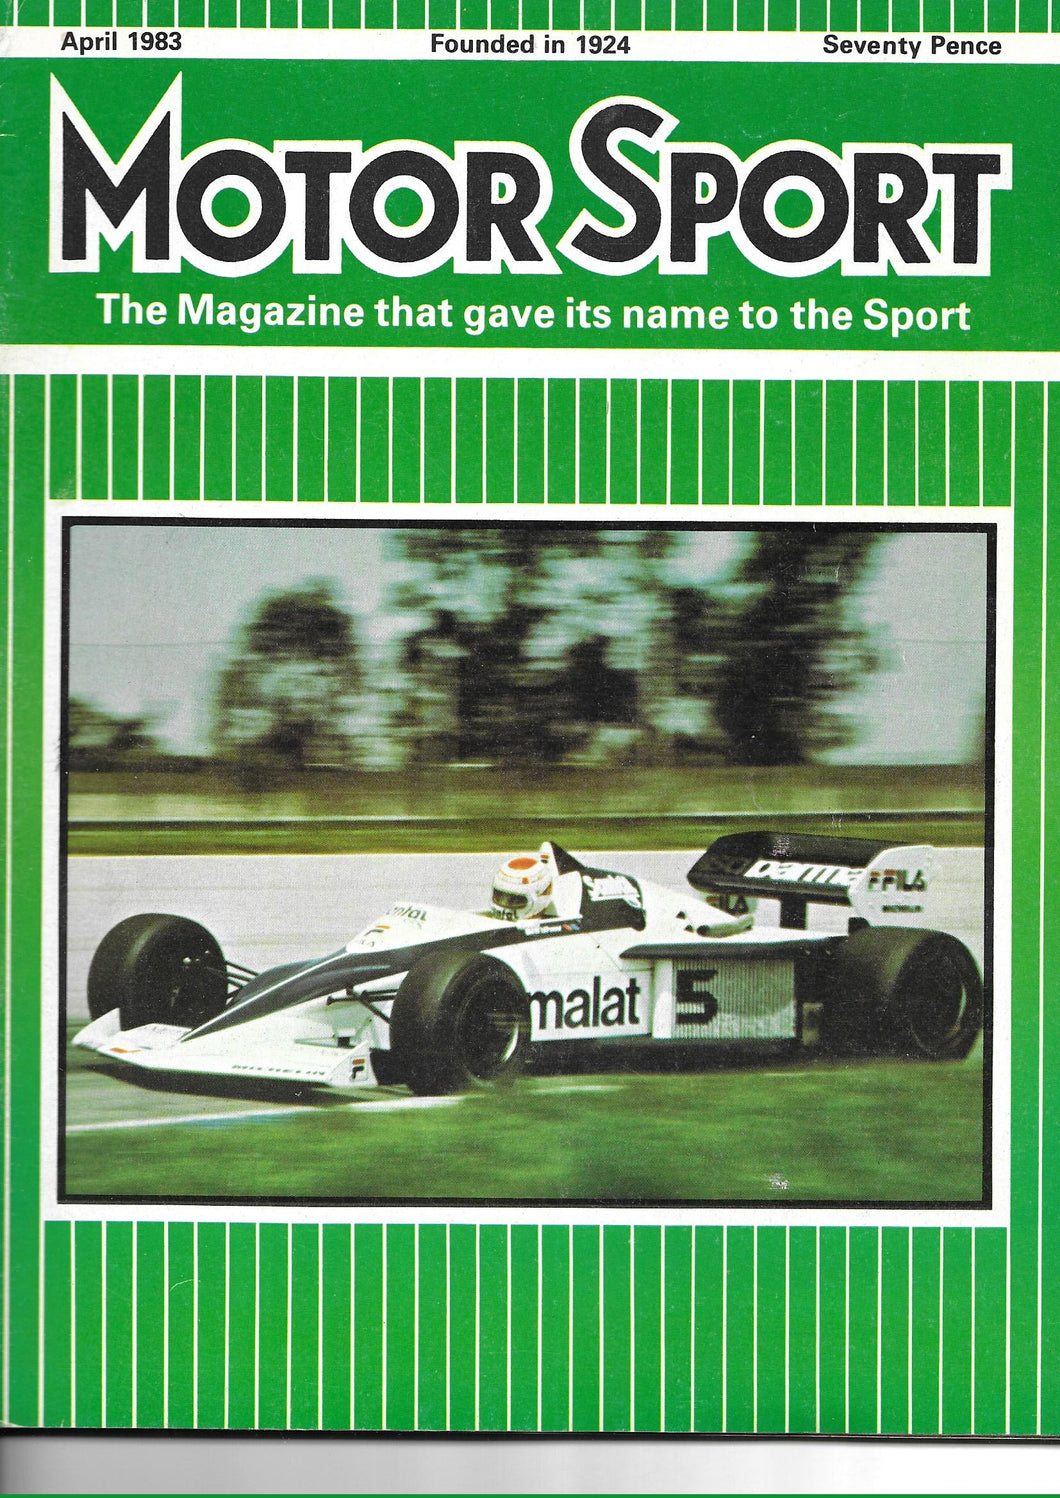 Motor Sport, Motorsport, Magazine, Vol LIX No 4, April 1983, Very Good Condition